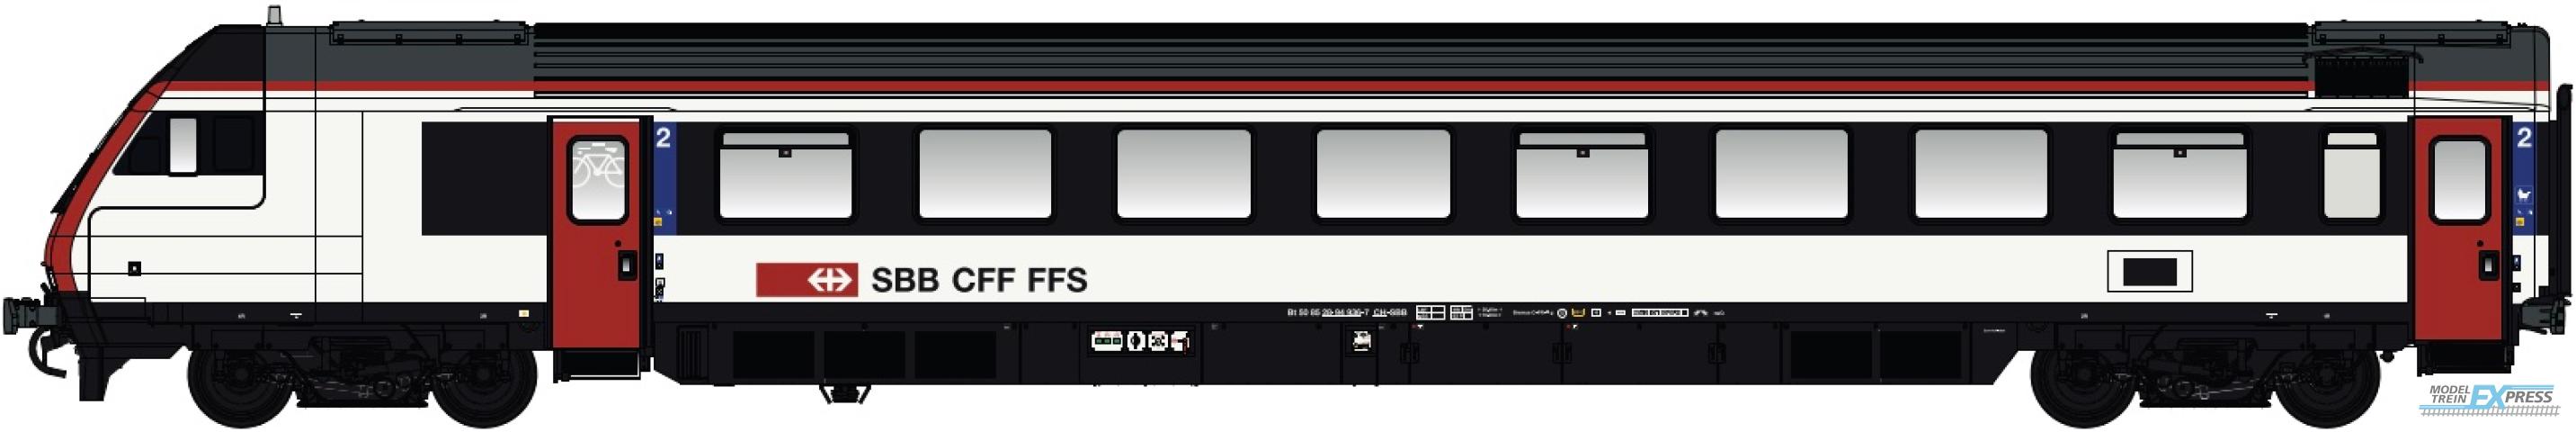 LS Models 472201AC InterCity-stuurstandwagen 2e klasse, nieuwe kleurstelling vanaf 2022 met rode deuren en rode dakrand  /  Ep. VI  /  SBB  /  HO  /  AC  /  1 P.